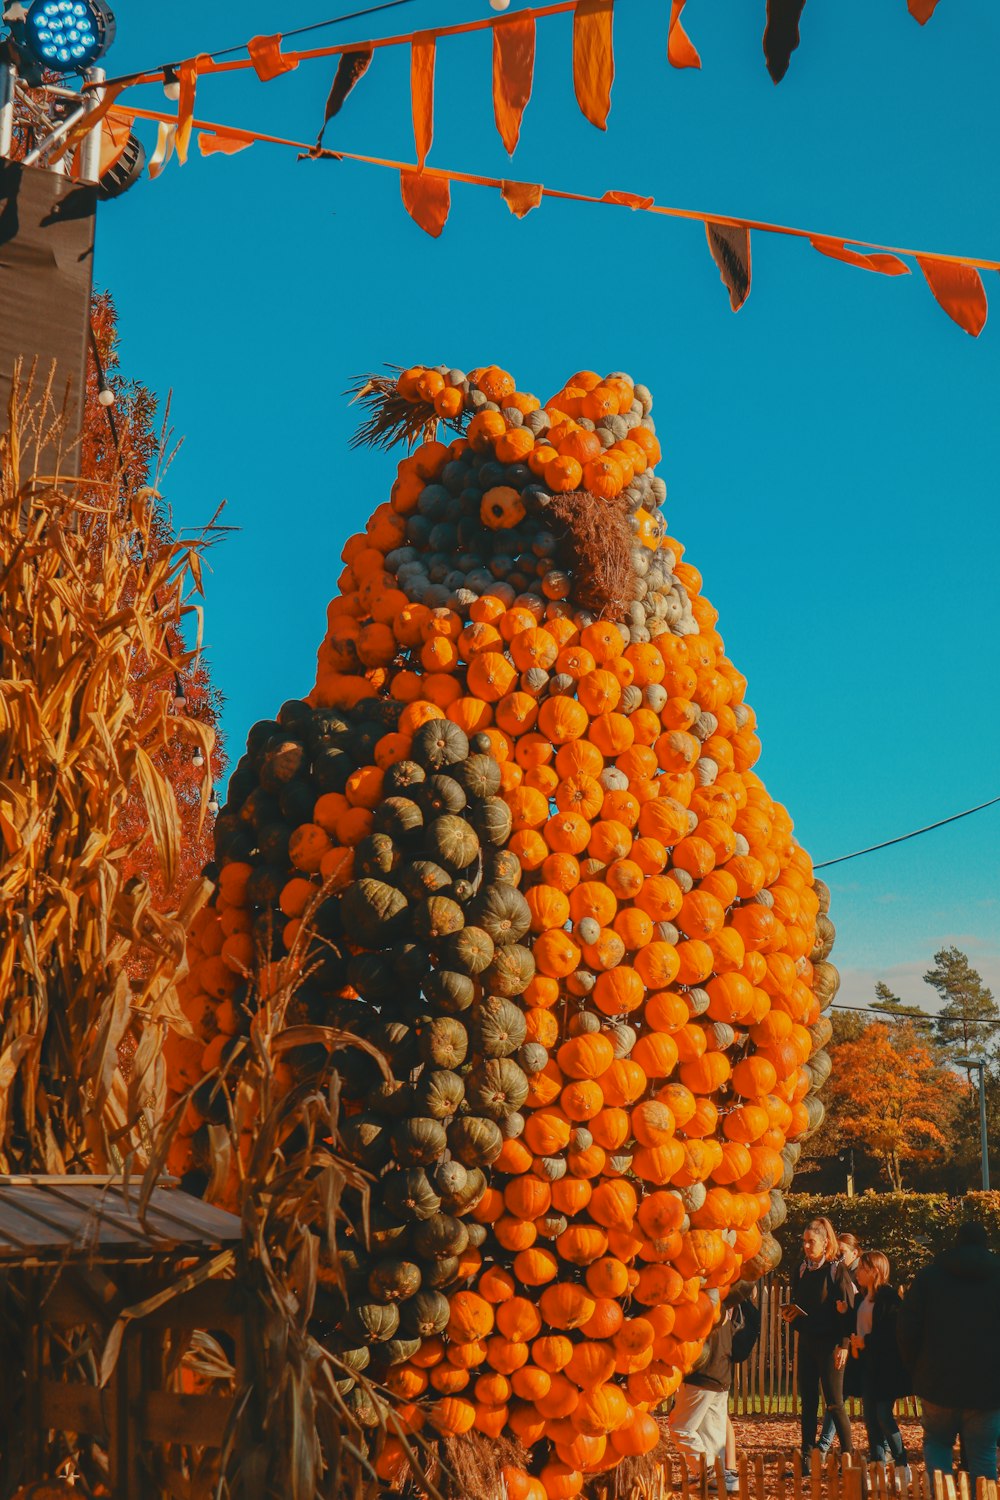 a large orange bird made out of pumpkins